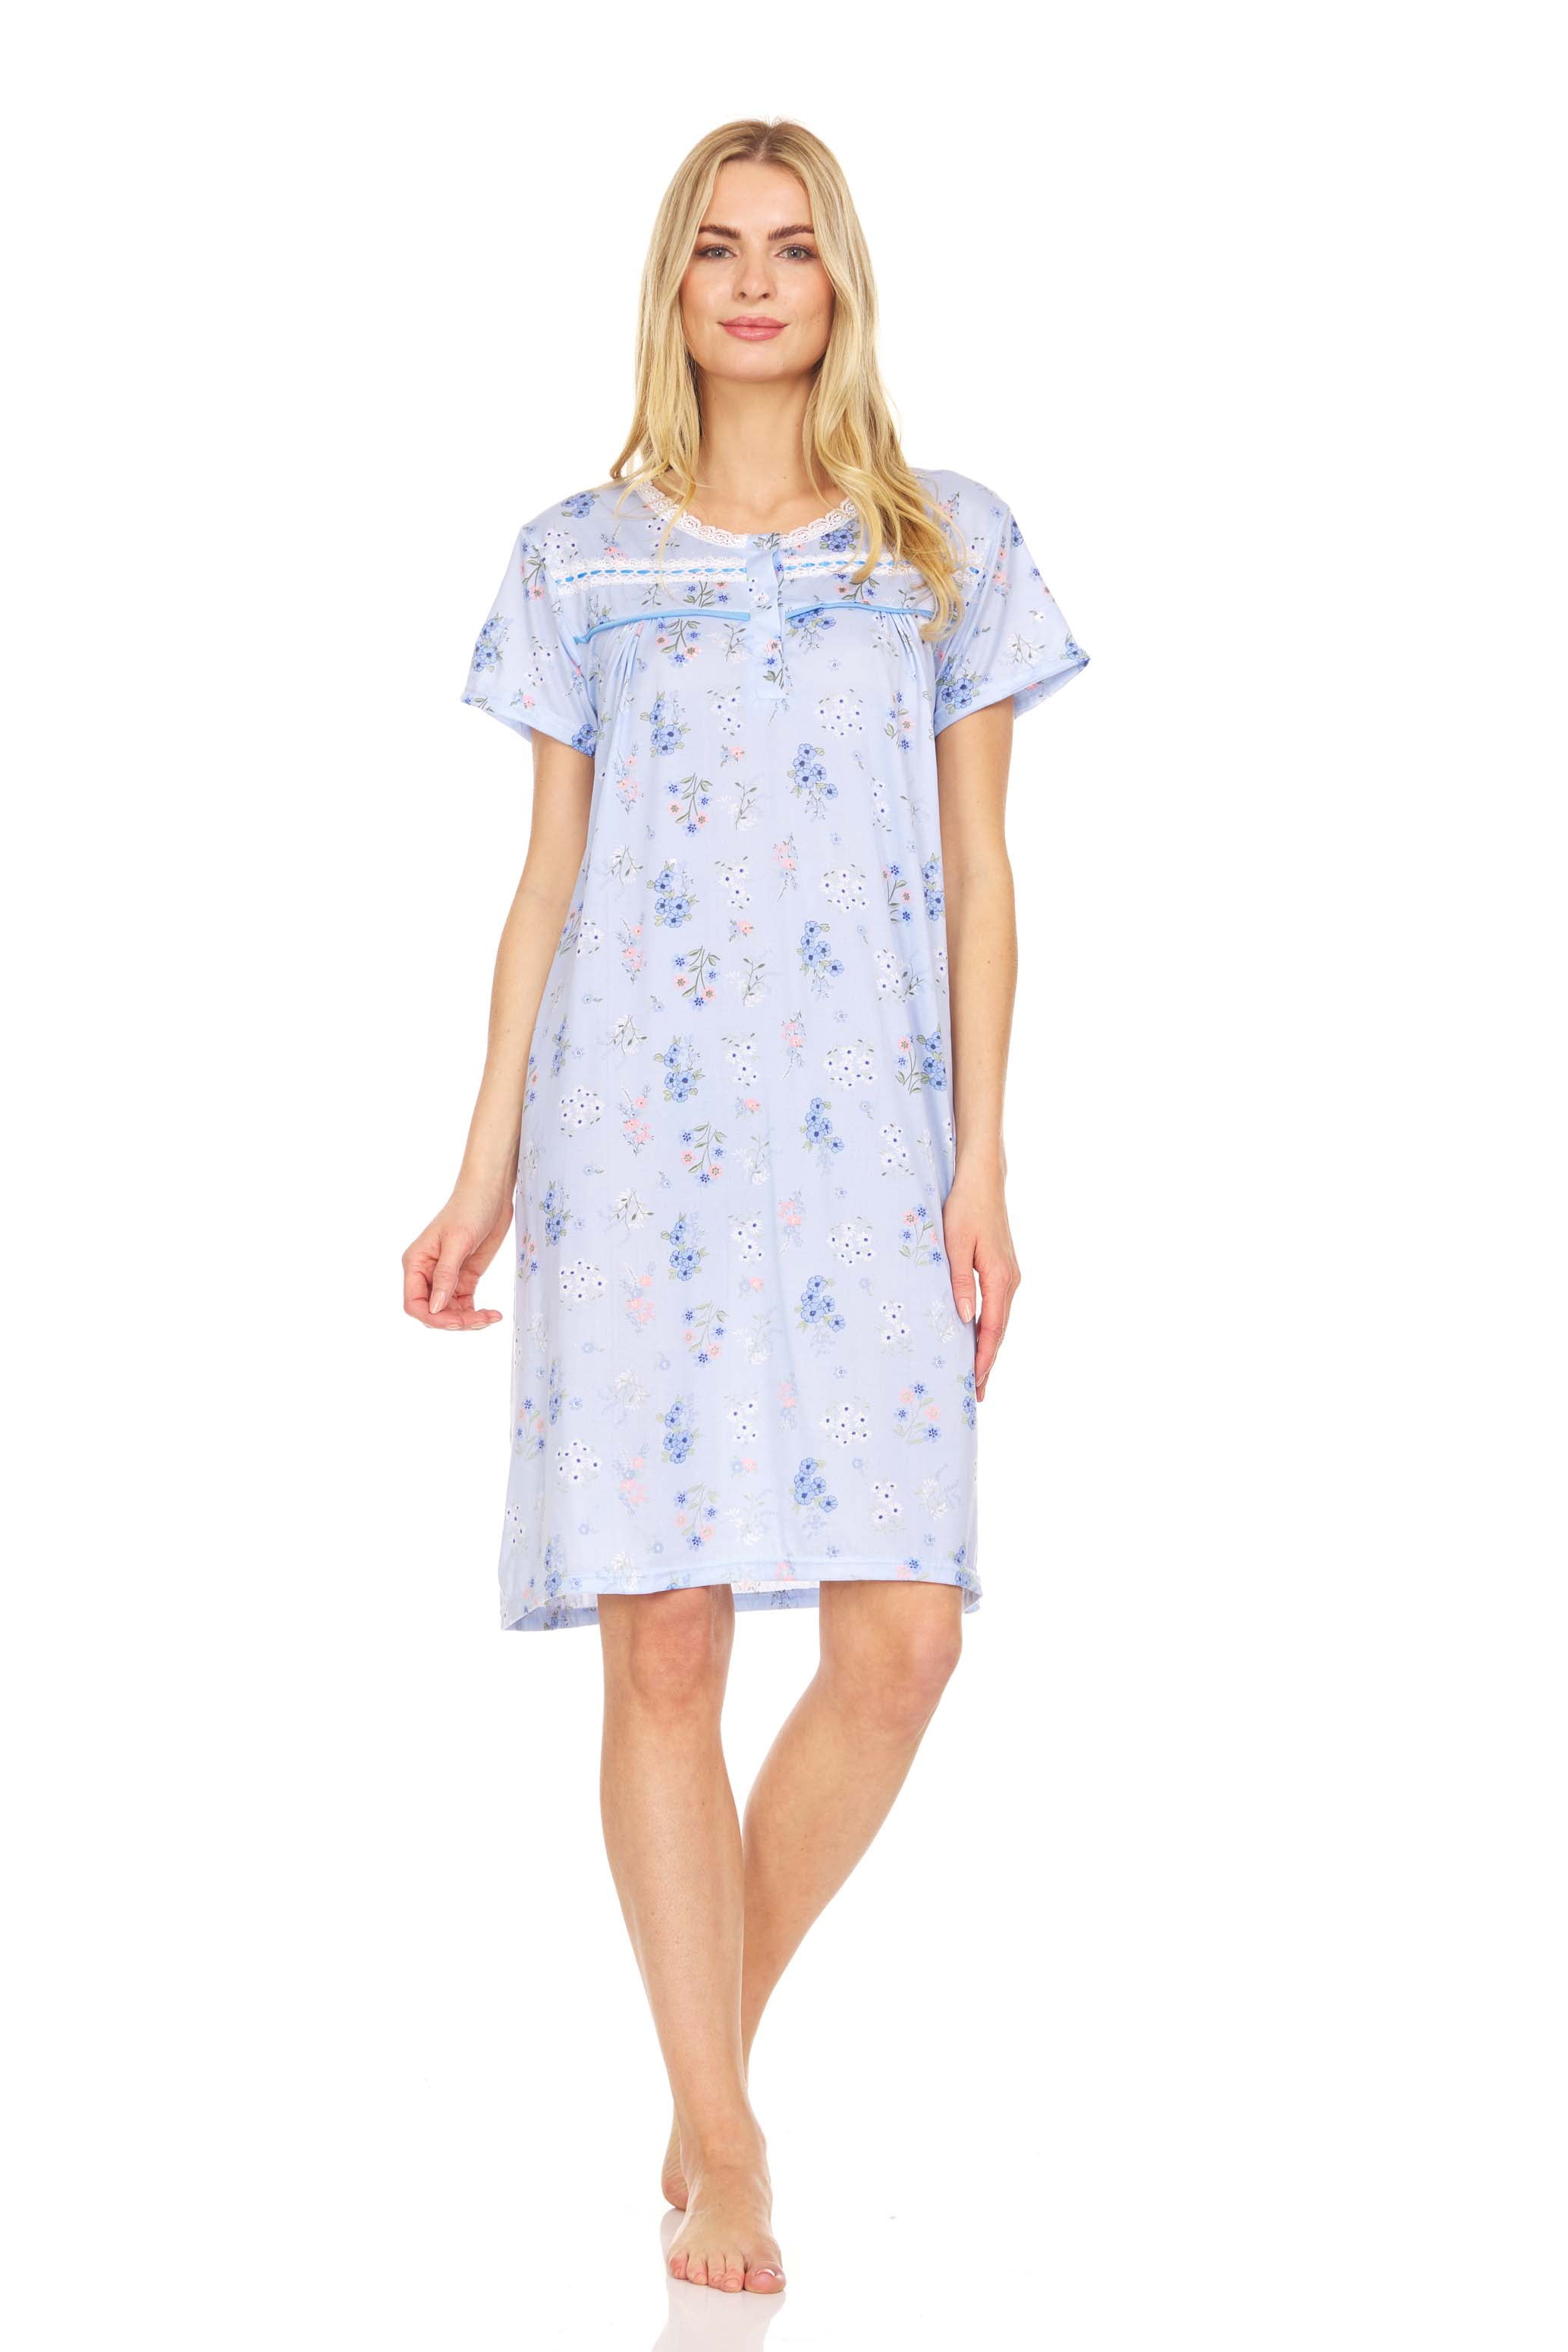 822 Womens Nightgown Sleepwear Pajamas - Woman Short Sleeve Sleep Dress Nightshirt Blue XL